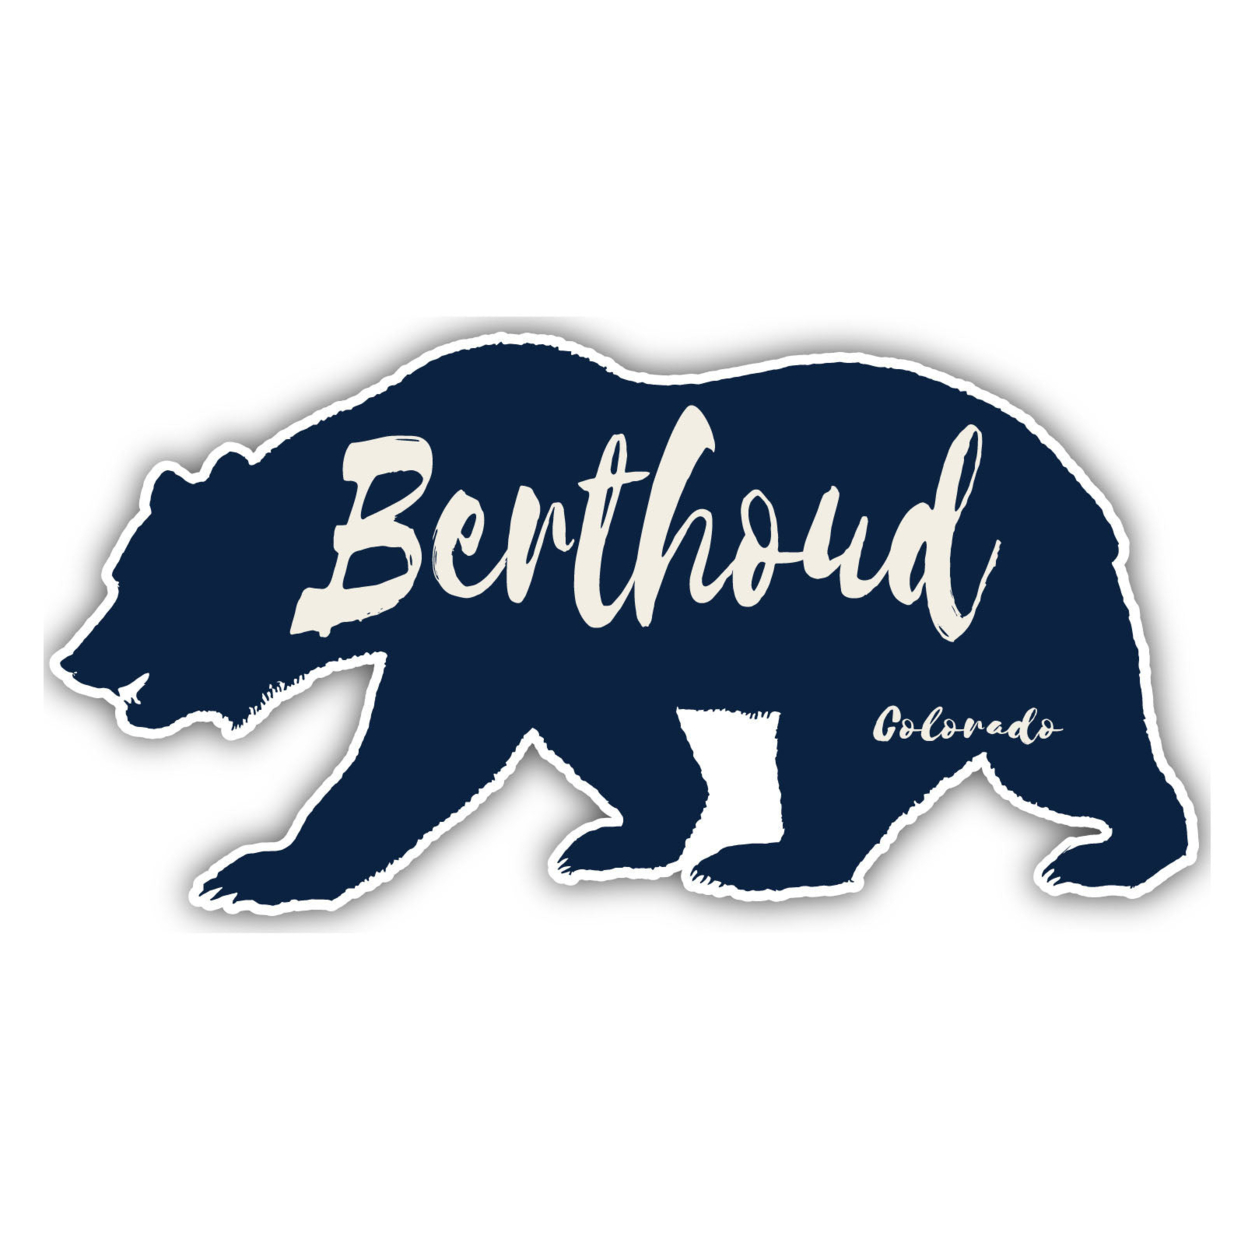 Berthoud Colorado Souvenir Decorative Stickers (Choose Theme And Size) - Single Unit, 6-Inch, Bear